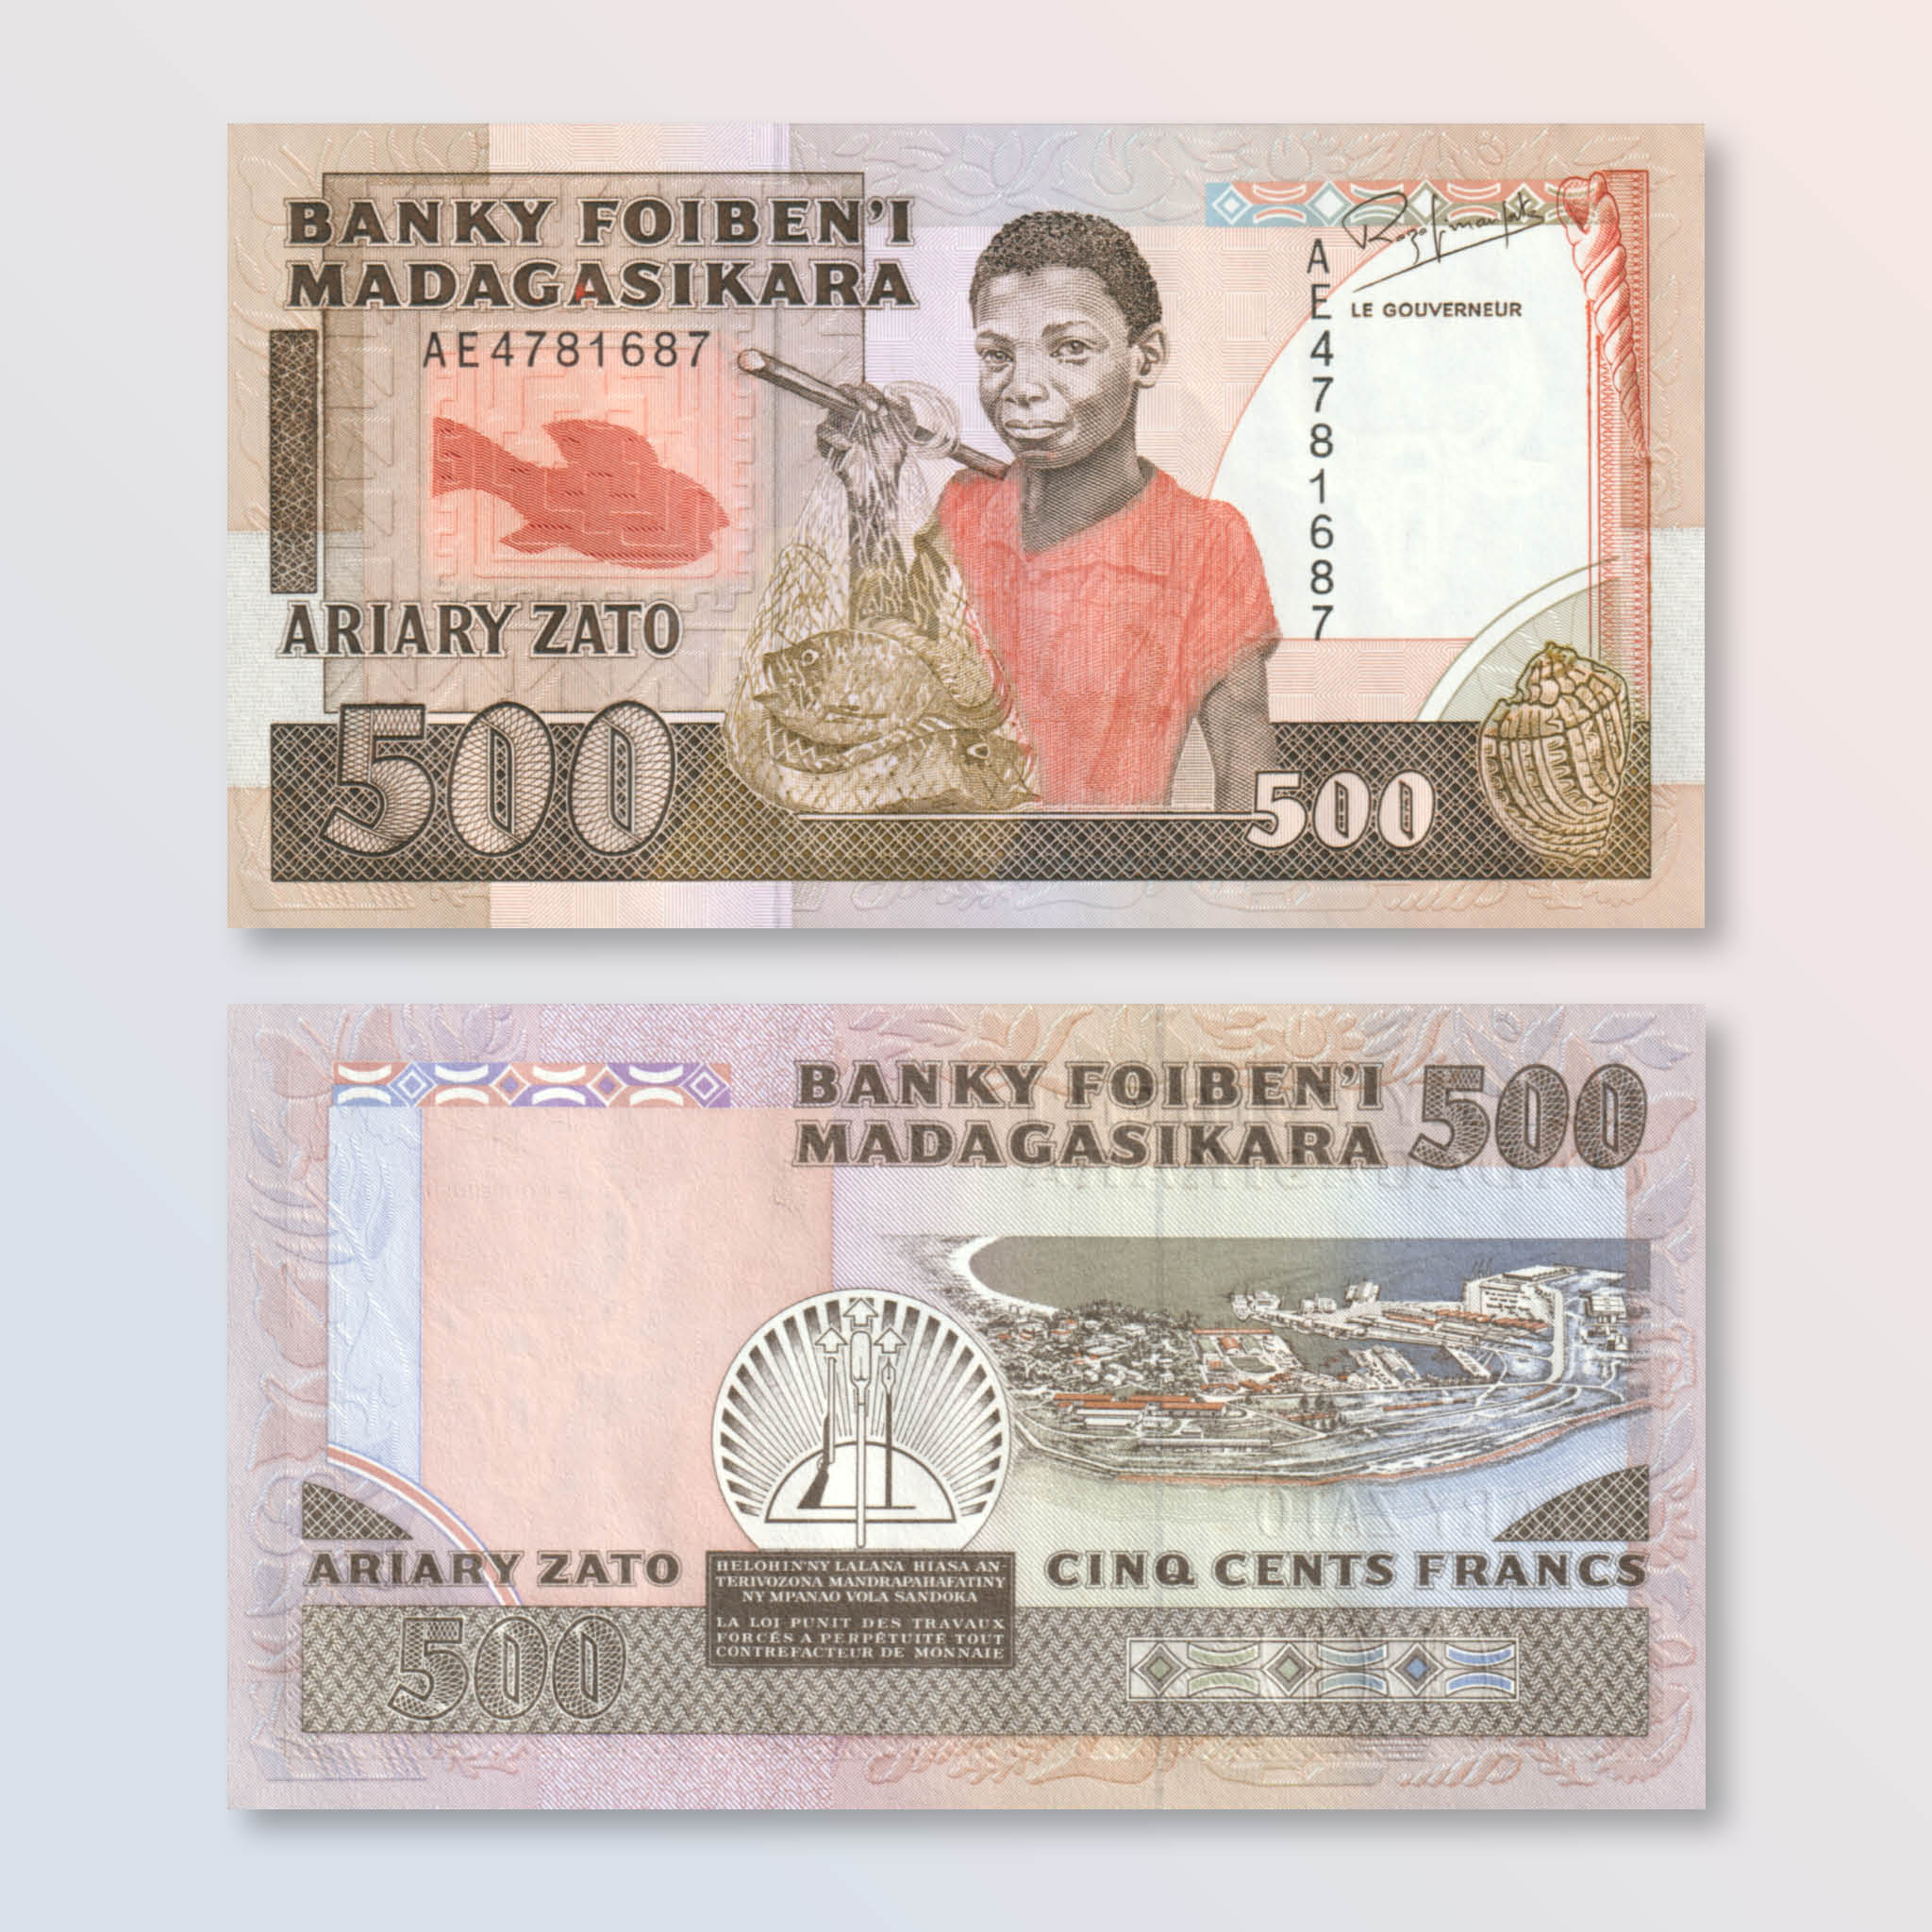 Madagascar 500 Francs, 1988, B305b, P71b, UNC - Robert's World Money - World Banknotes